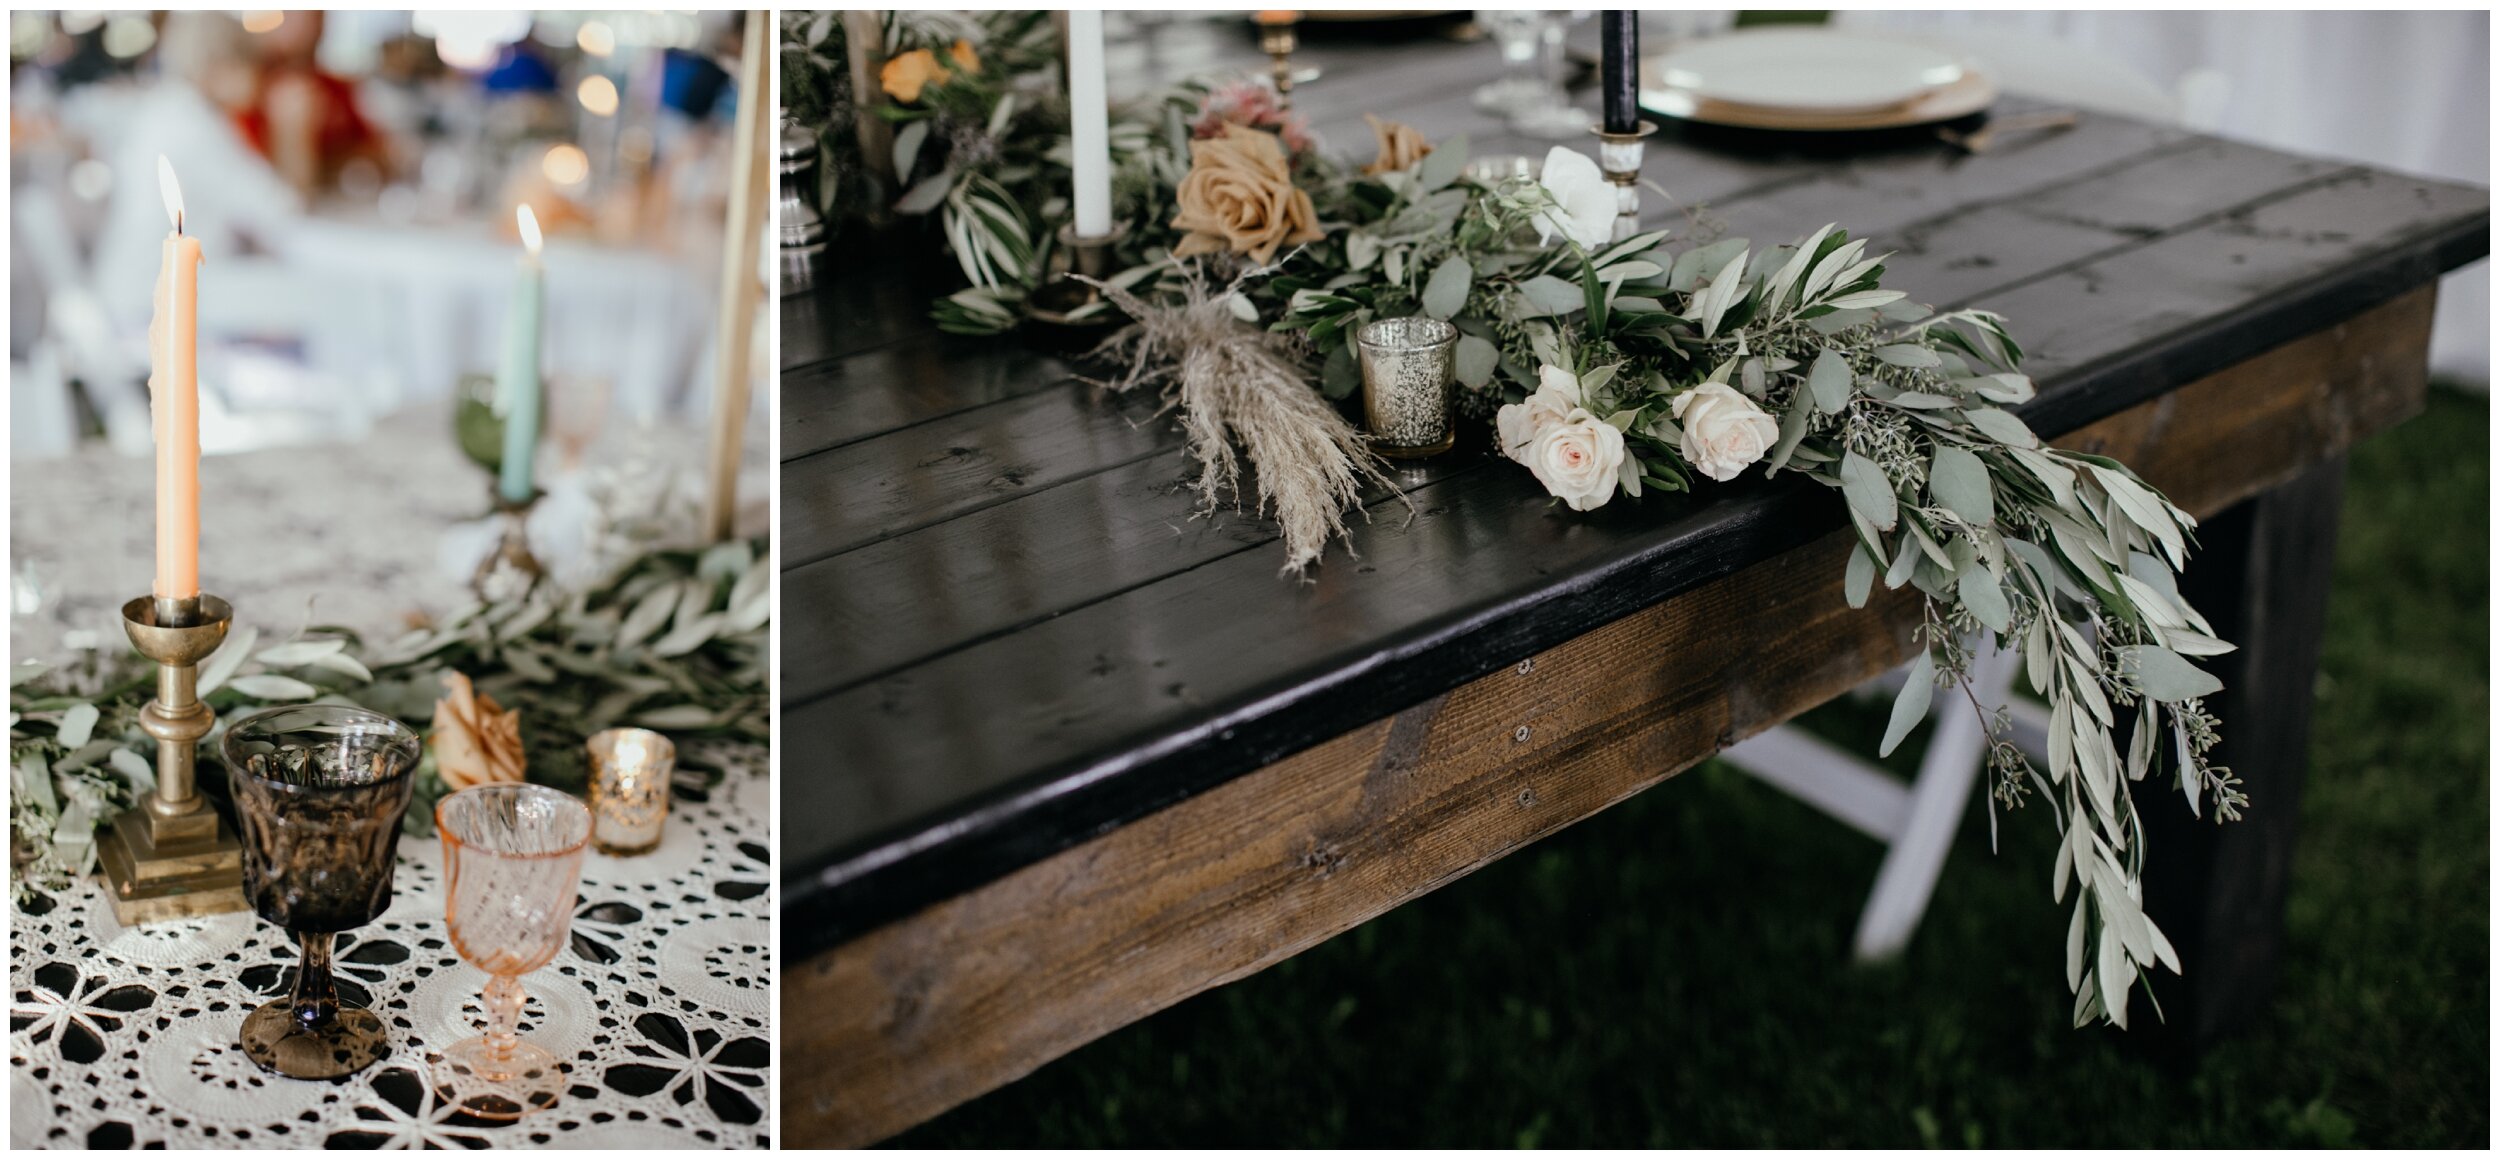 Boho table setting at Minnesota backyard wedding reception 